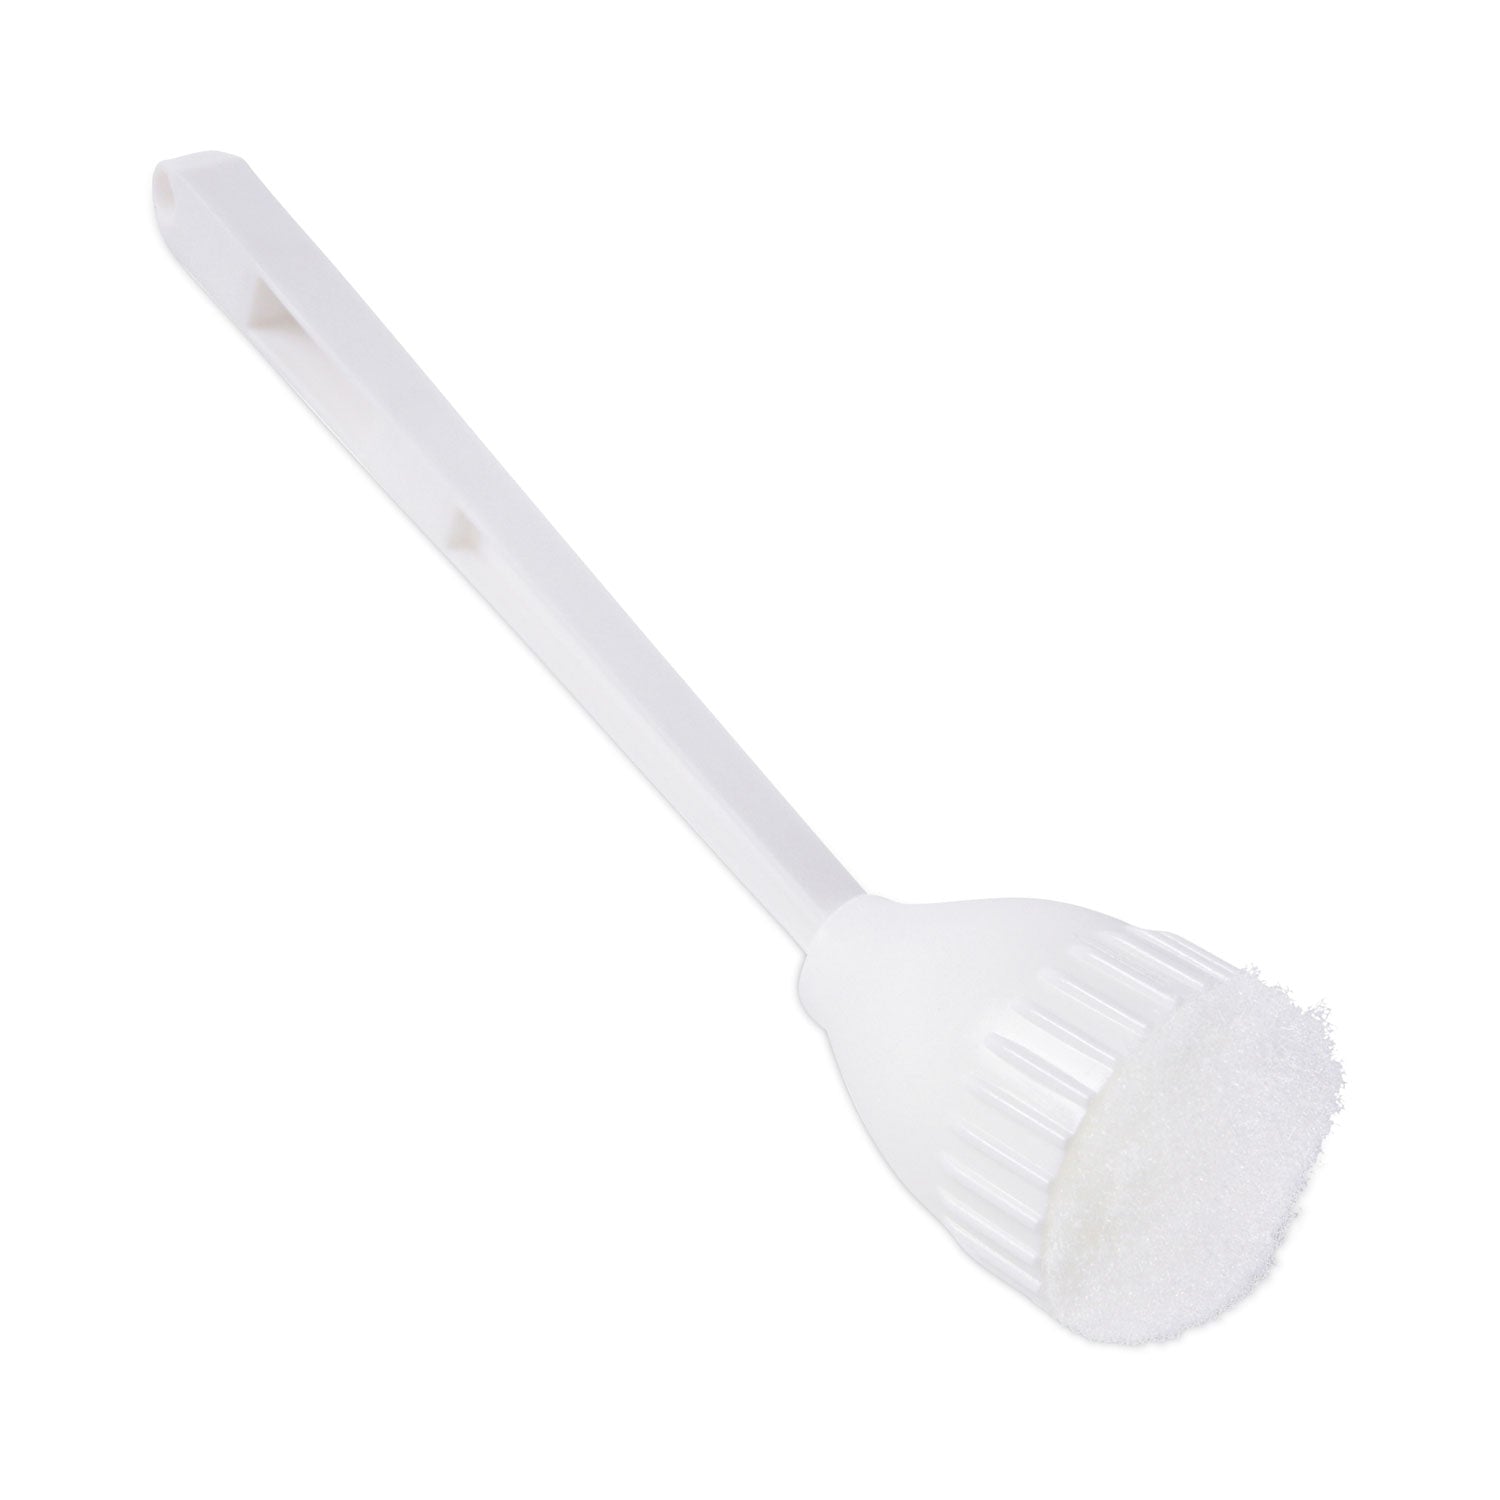 Cone Bowl Mop, 10" Handle, 2" Mop Head, White - 